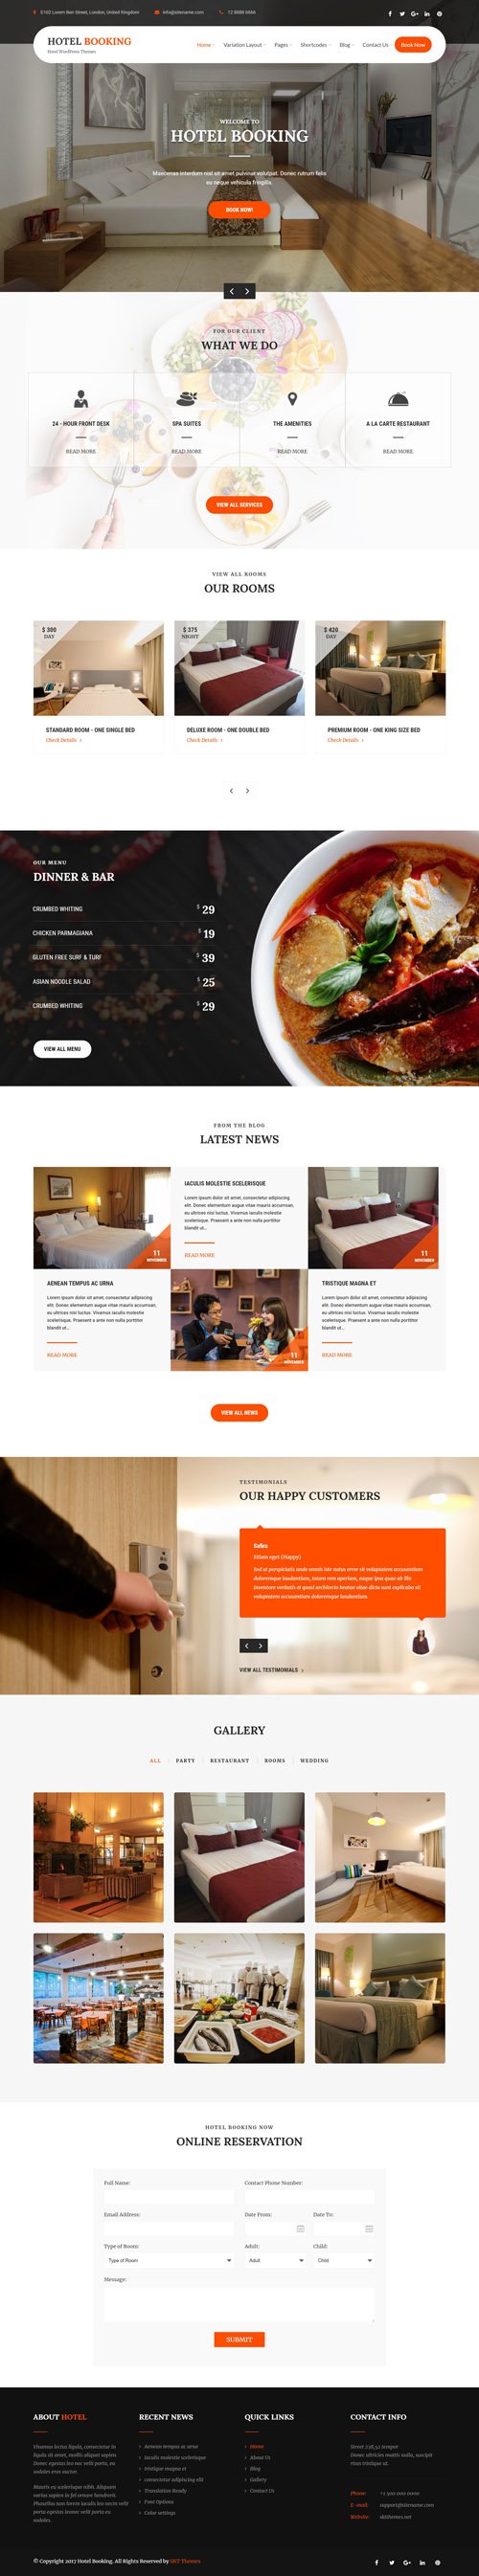 SKT Themes - Hotel Booking v1.0 - Responsive WordPress Theme